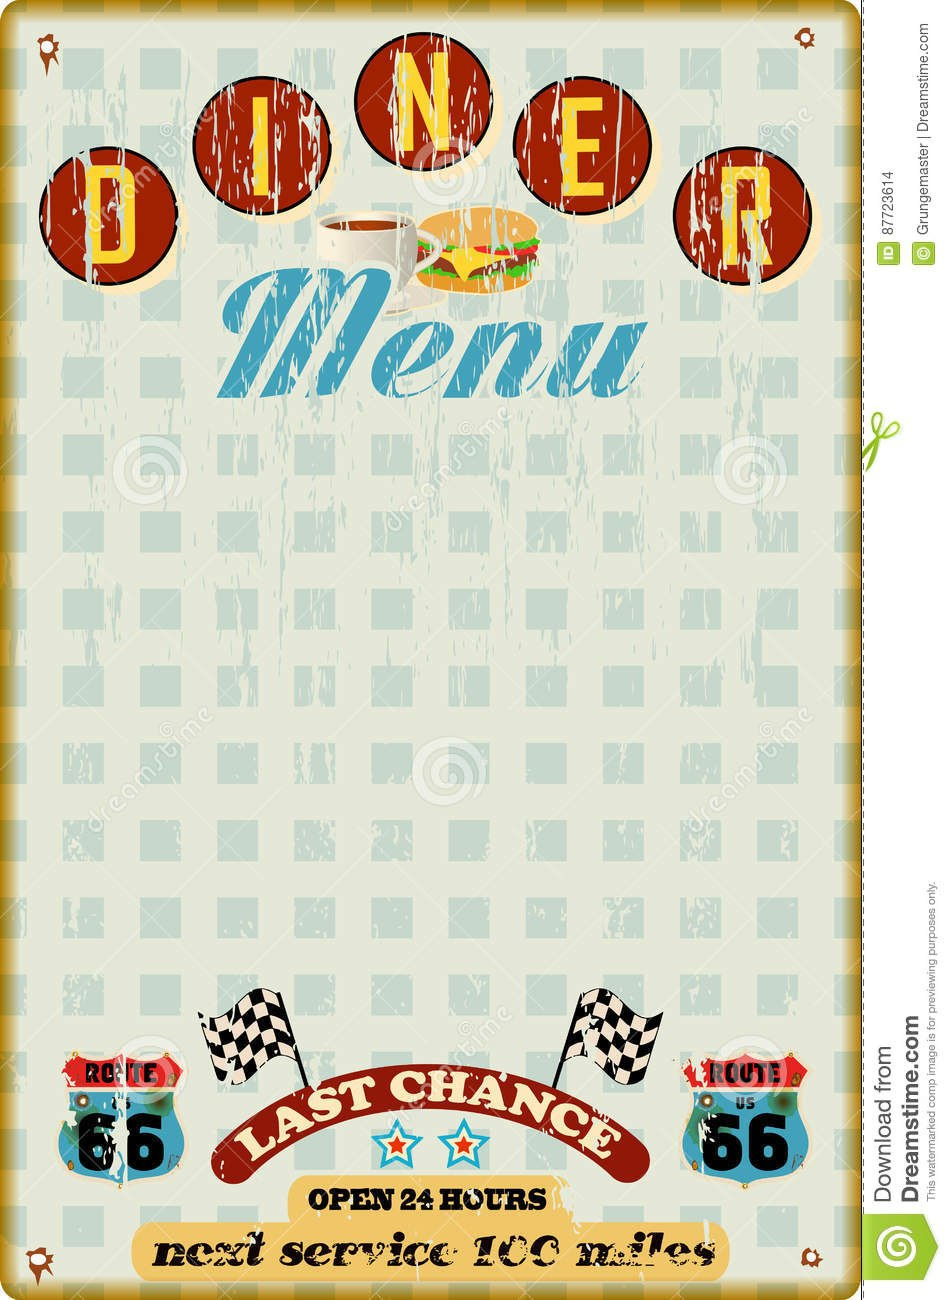 Menu Template For Diner Stock Vector Illustration Of Menu For Diner throughout Blank Restaurant Menu Template